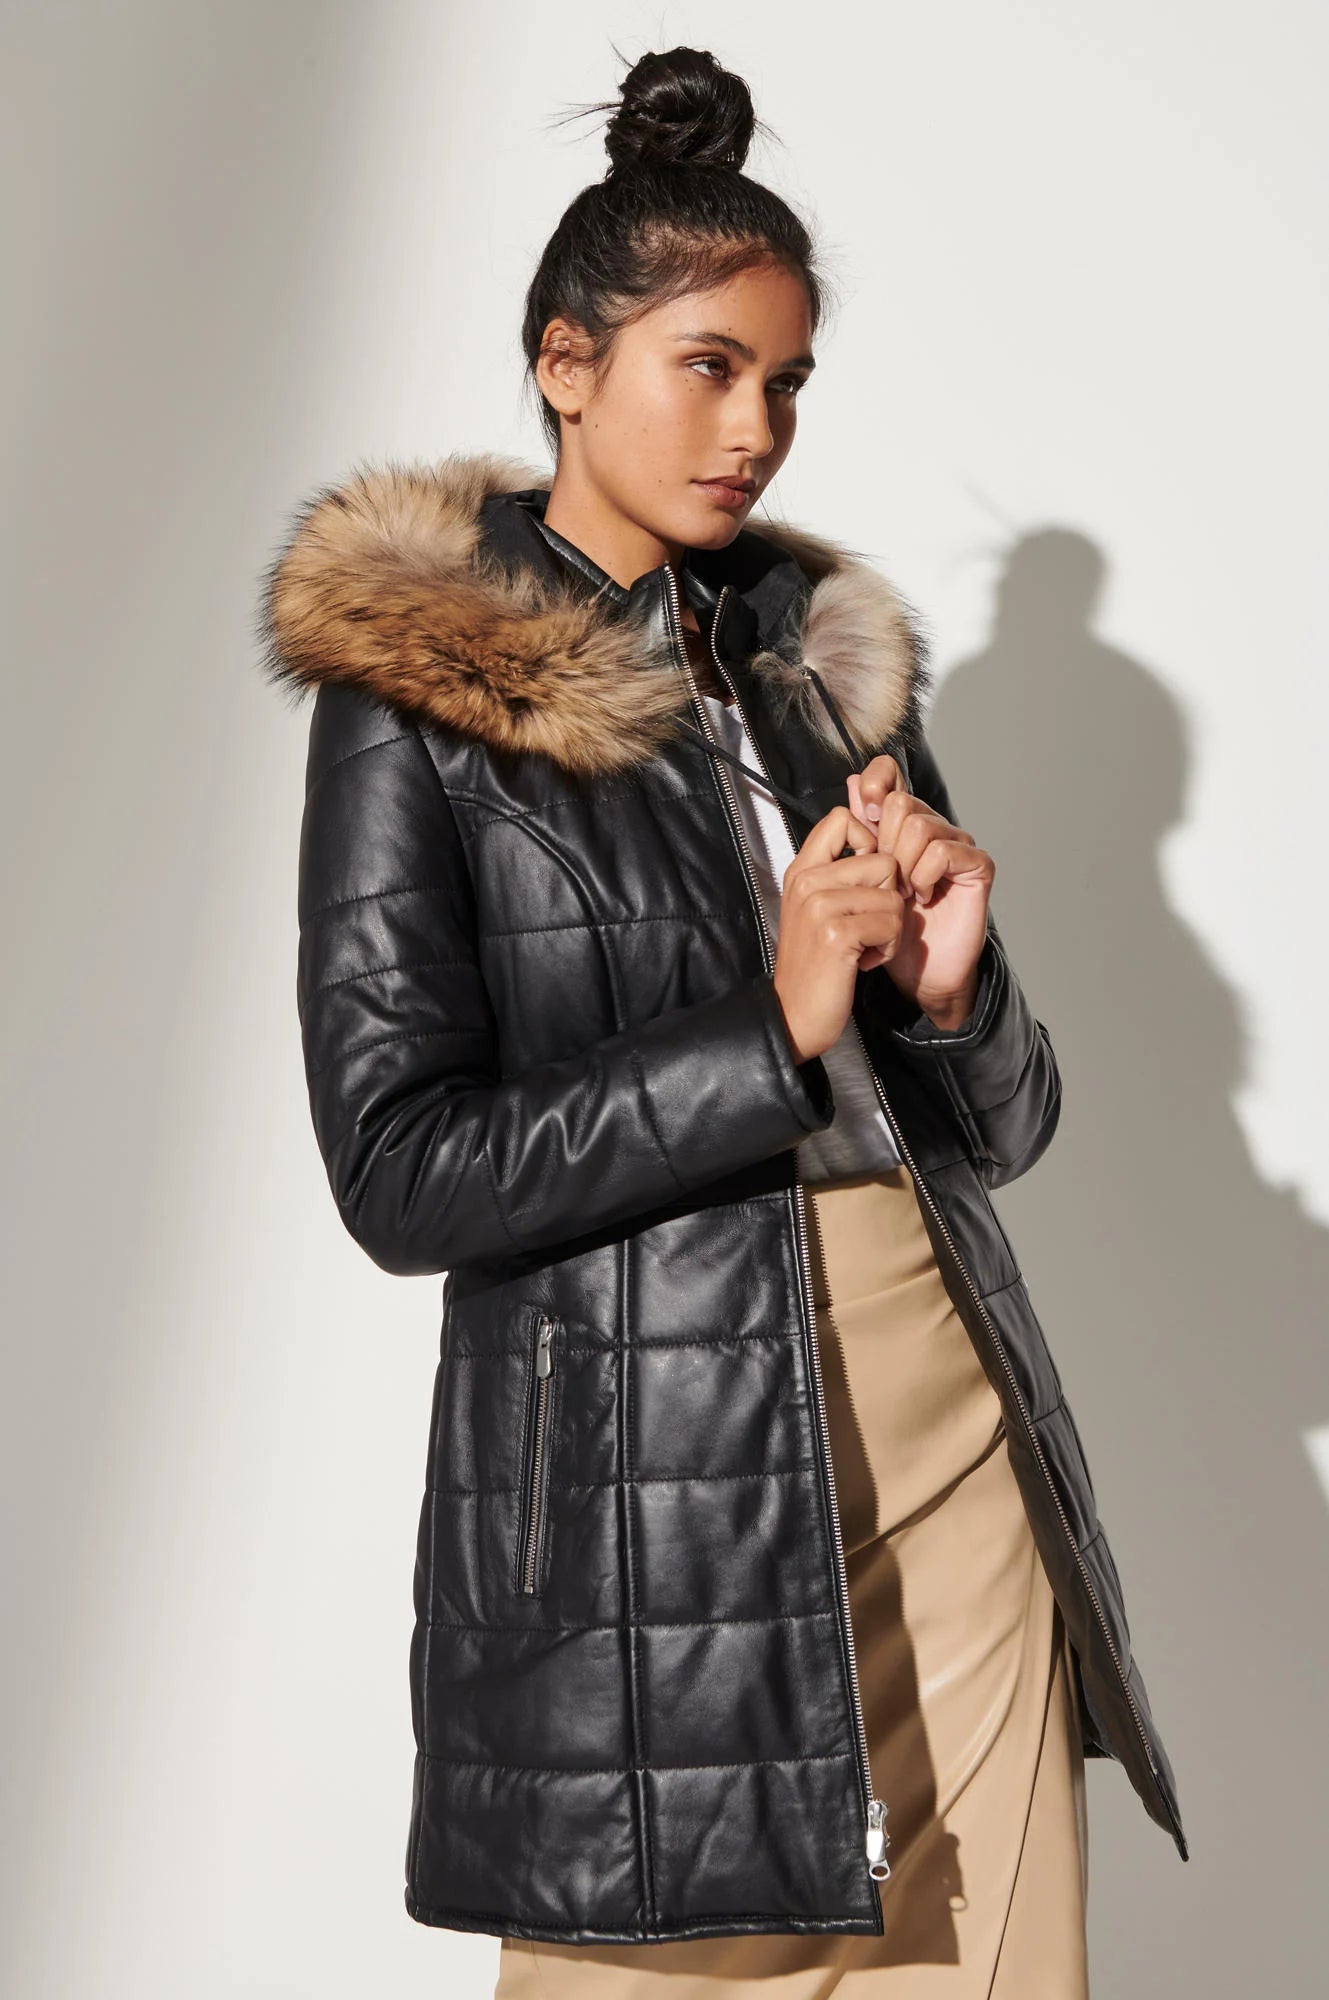 Maria Hooded Leather Coat